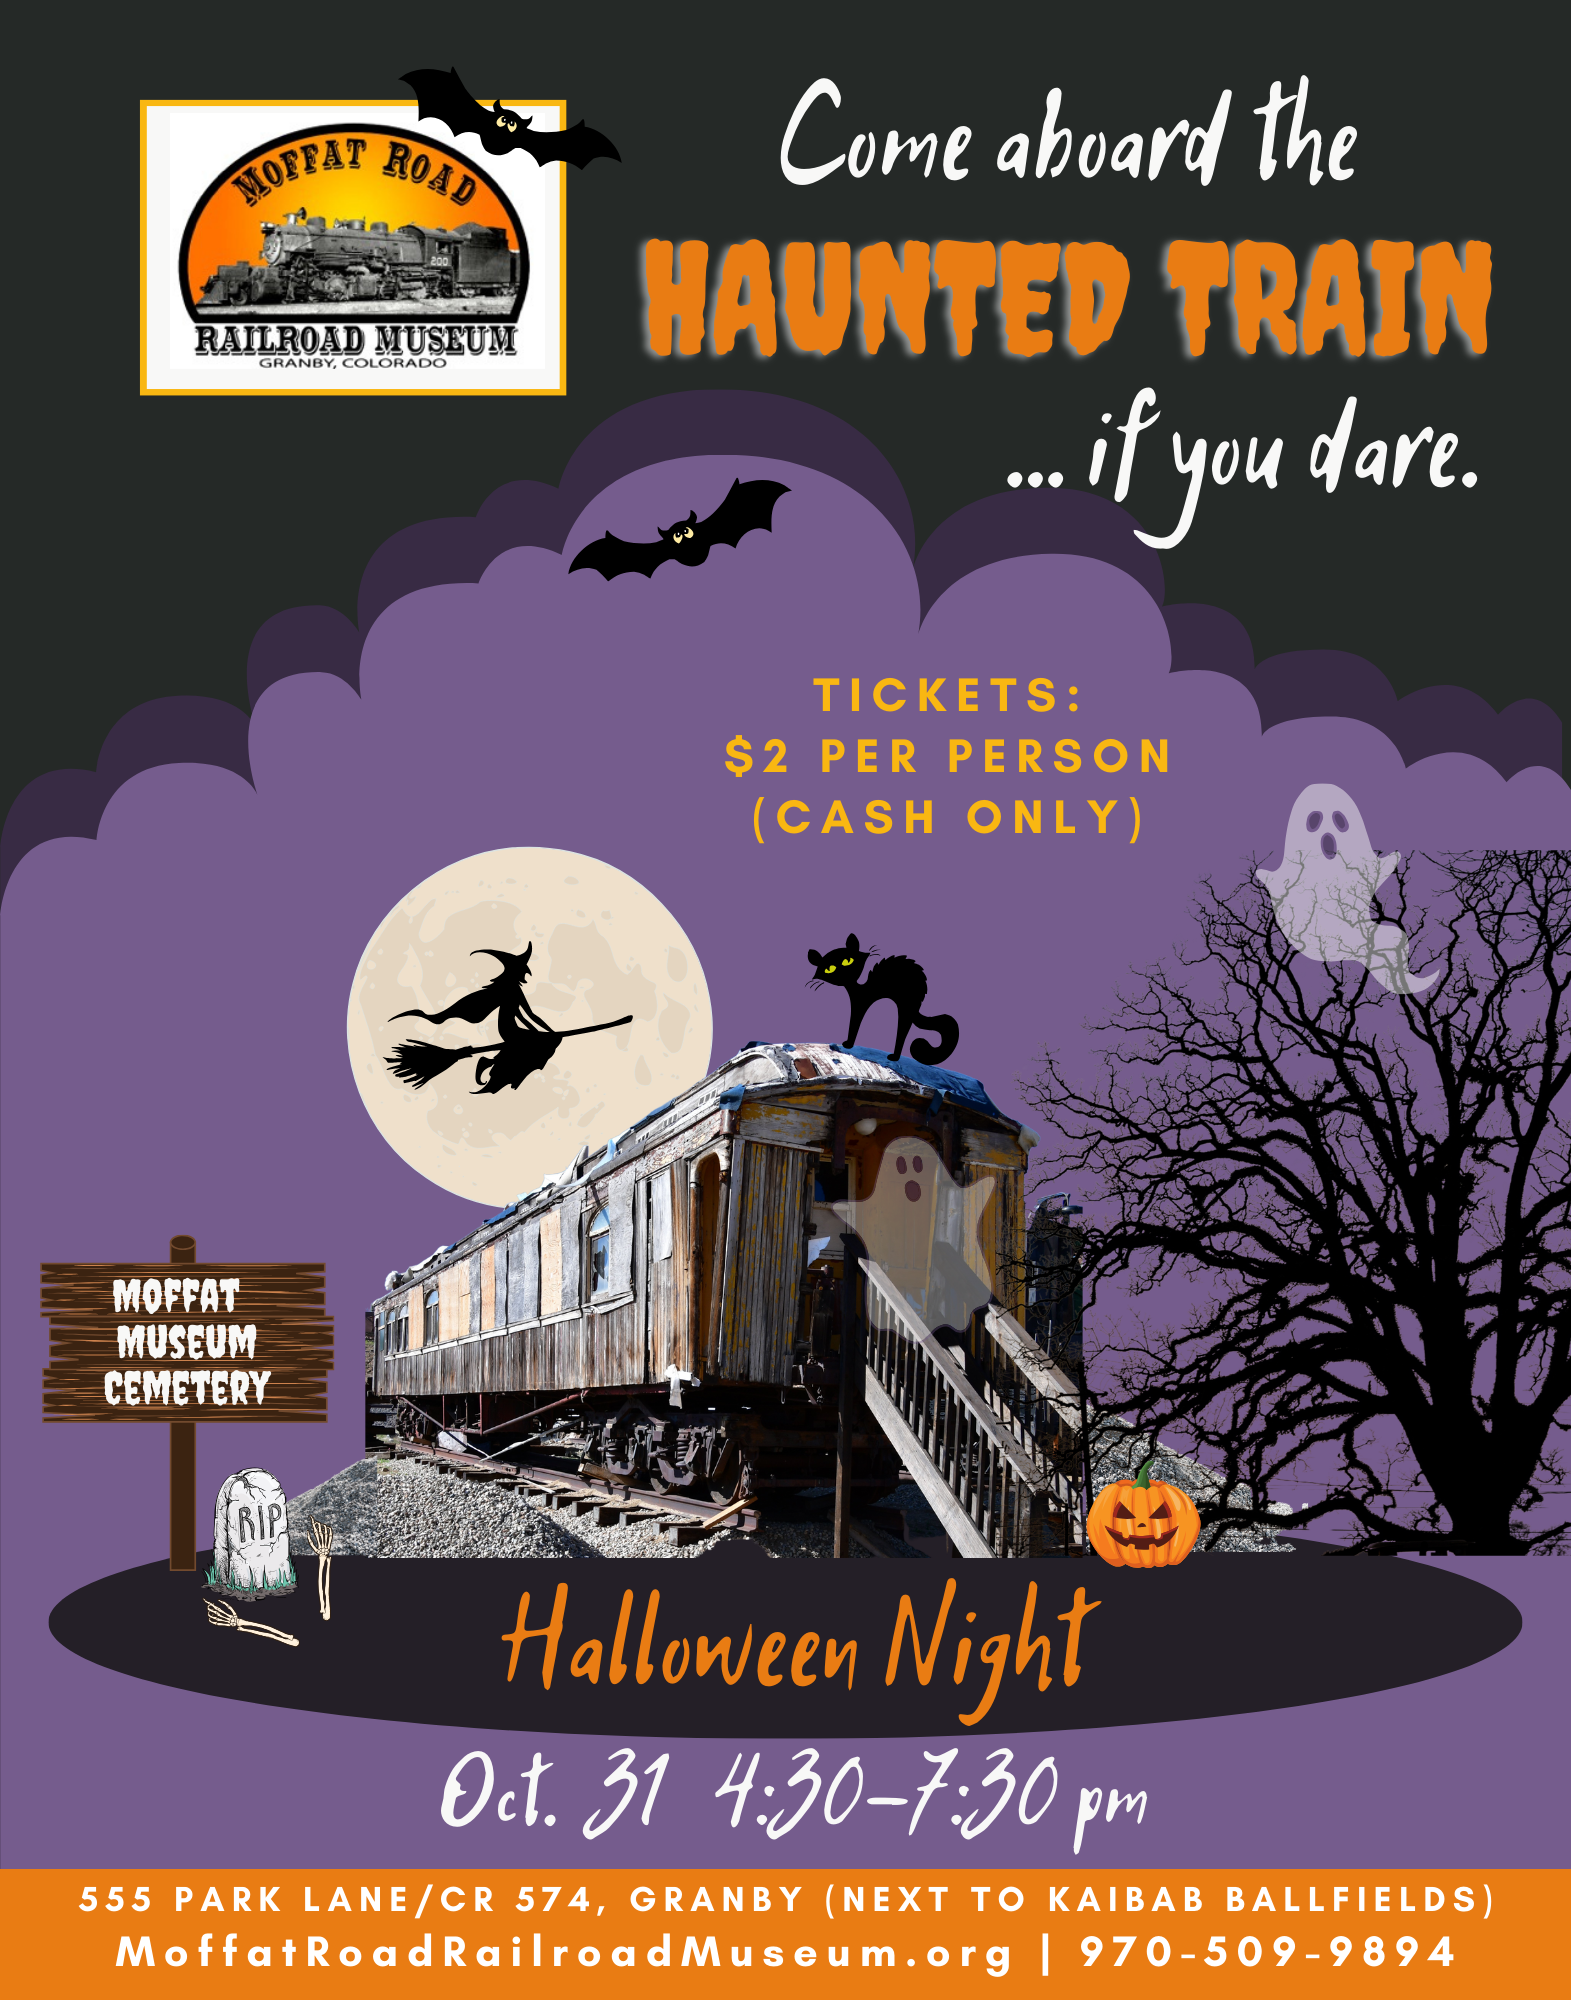 Haunted Train Halloween Night 4:30-7:30 pm